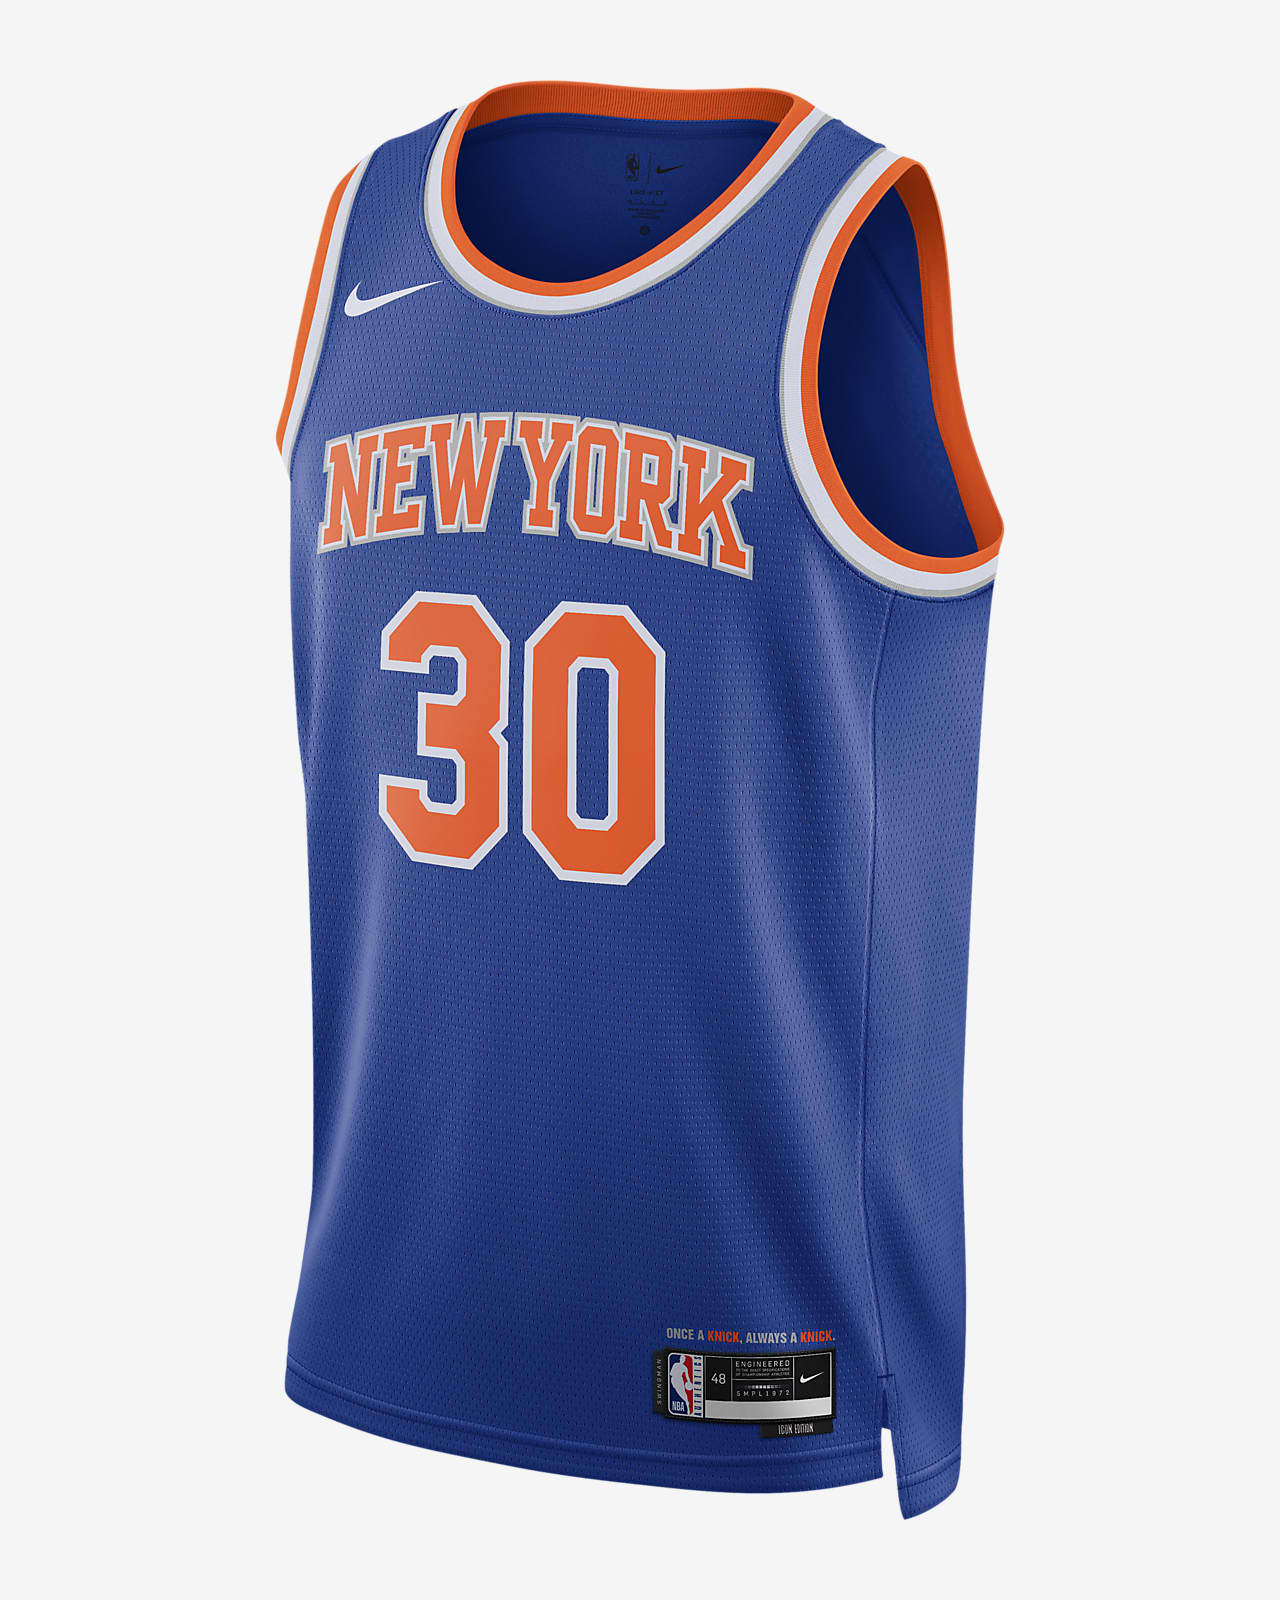 Nike Youth New York Knicks Dri-Fit Swingman Shorts - Blue - XL